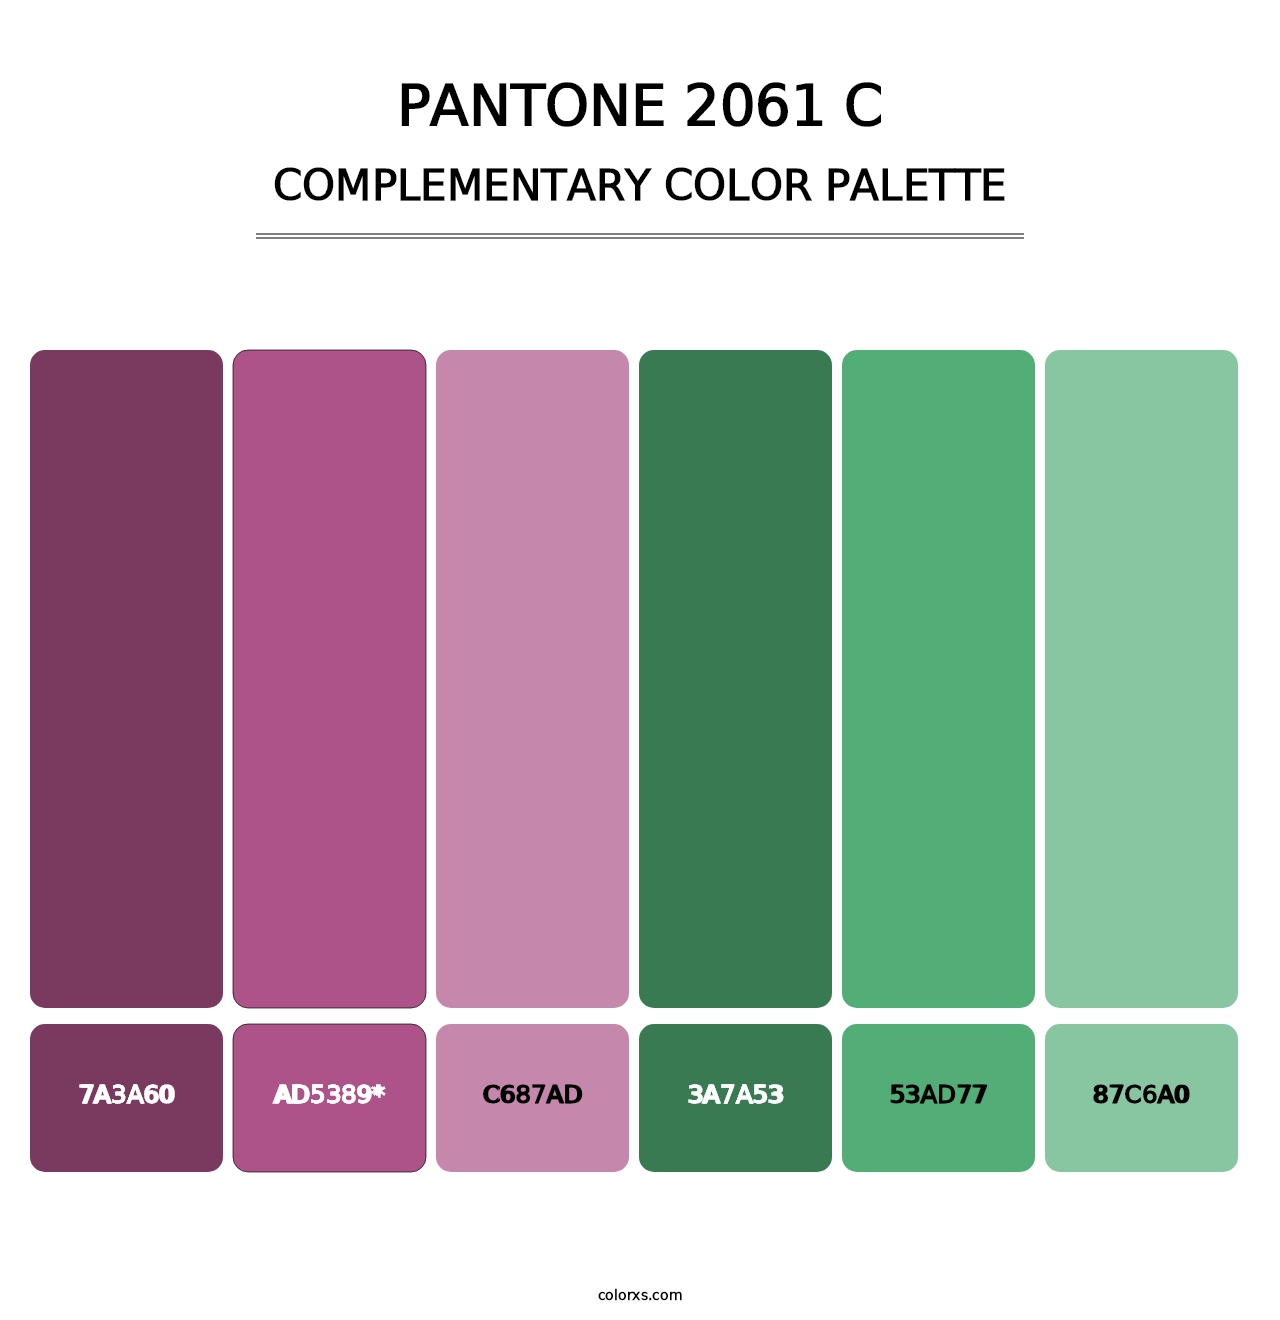 PANTONE 2061 C - Complementary Color Palette